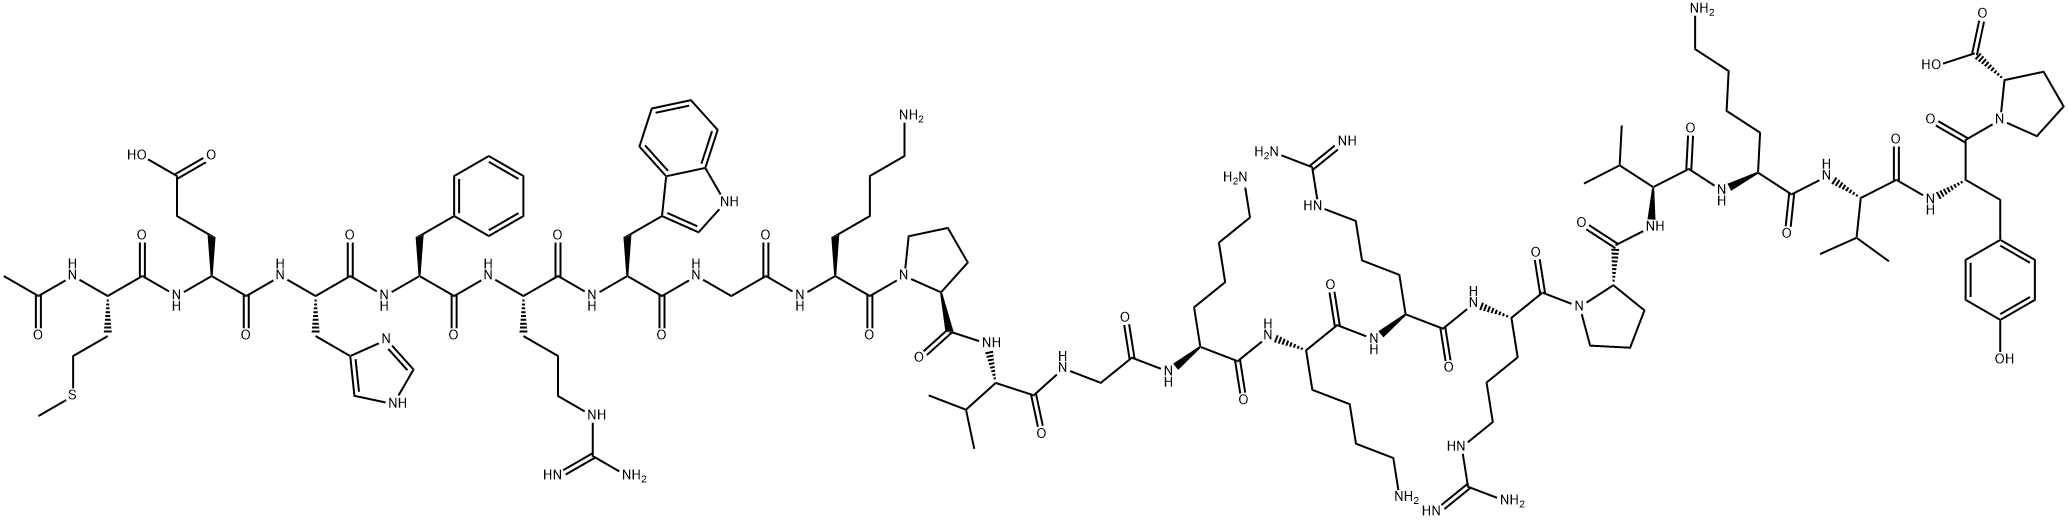 Acetyl-ACTH (4-24) (human, bovine, rat) Structure